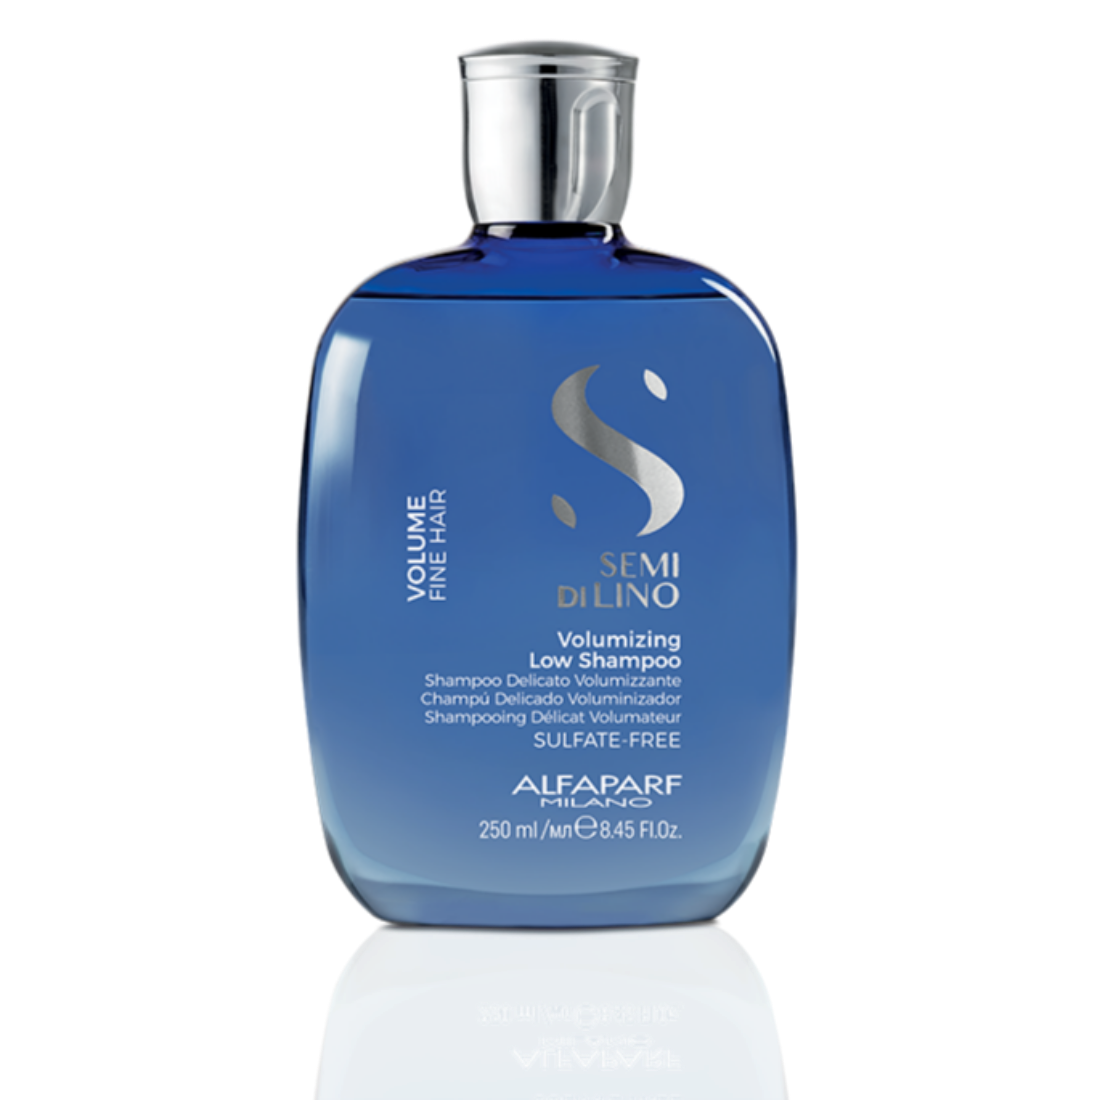 AlfaParf Volumizing low shampoo 